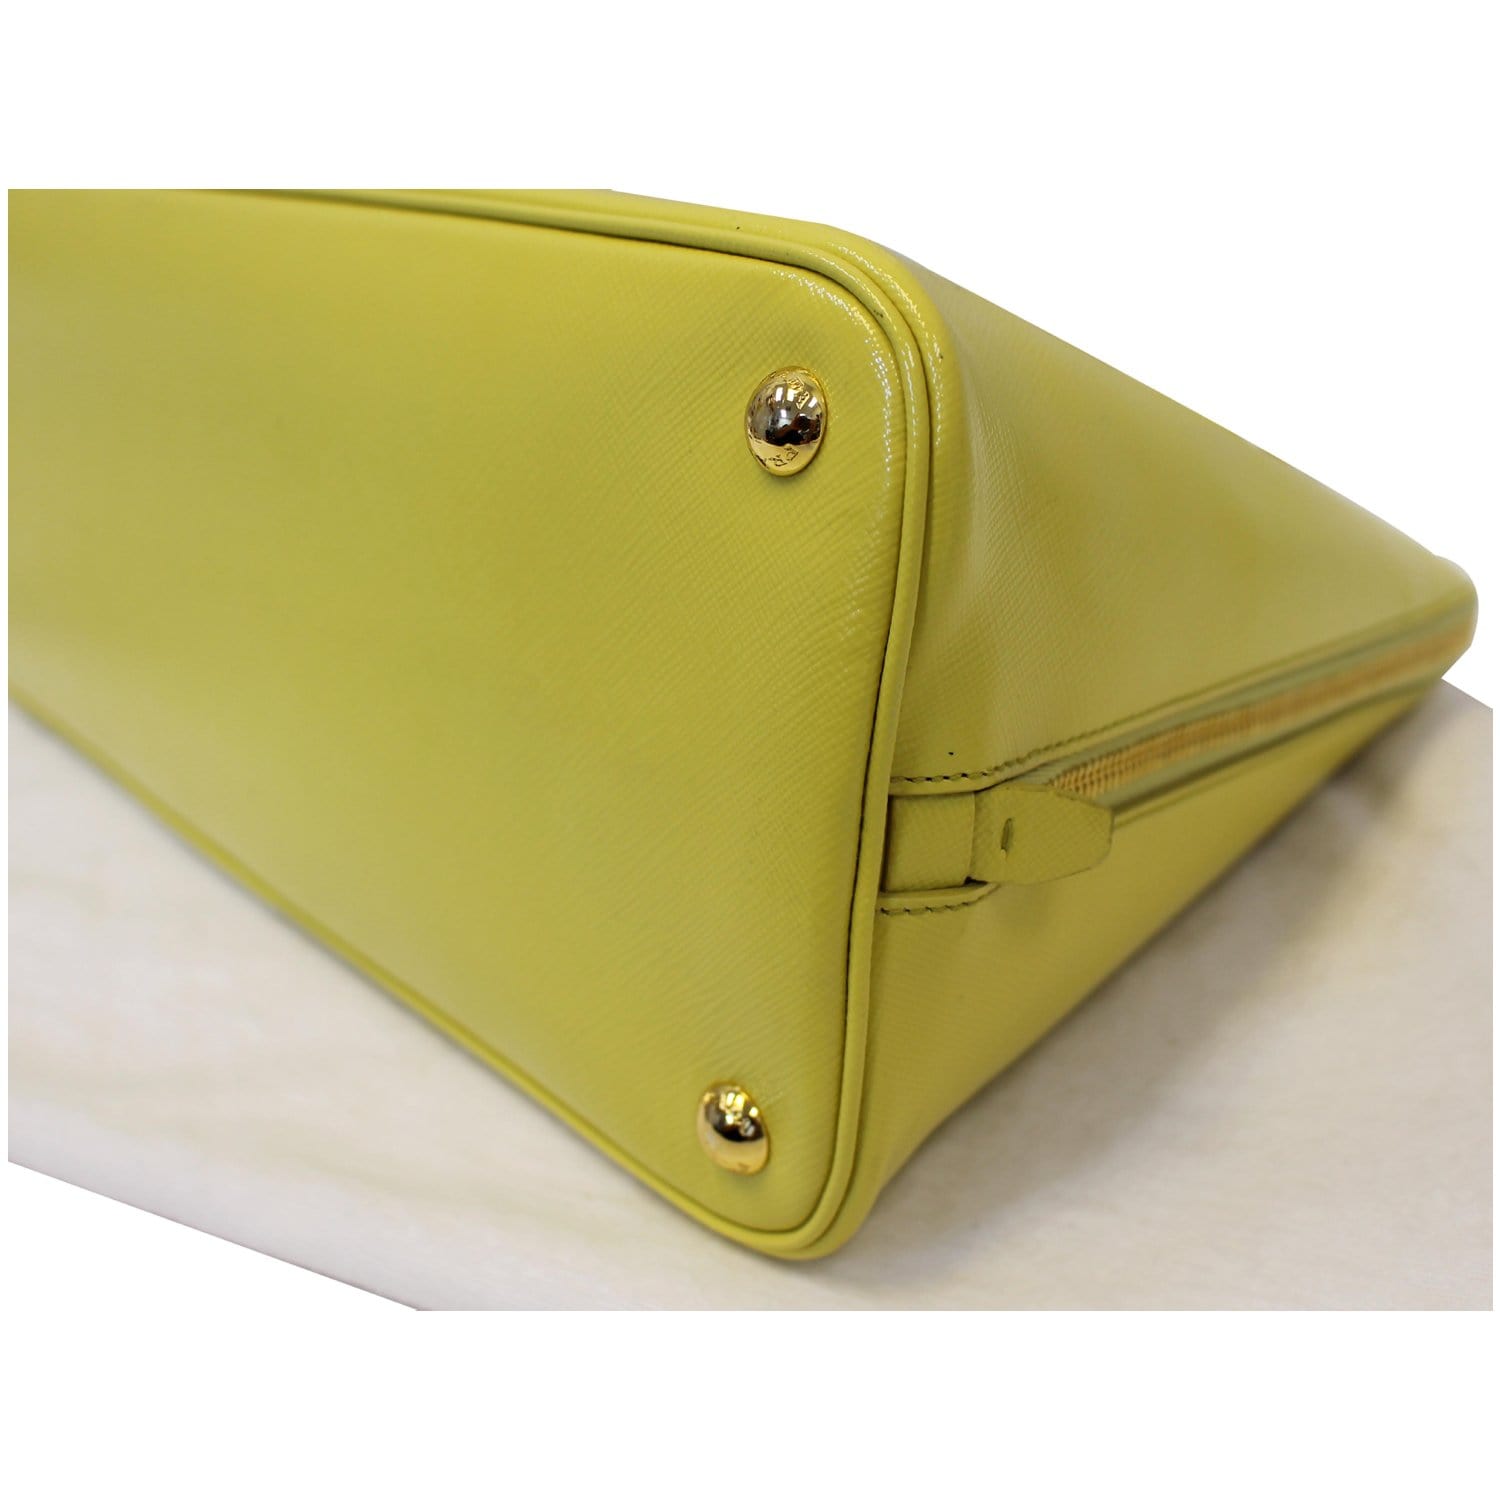 Prada Saffiano Lux Leather Top Handle Satchel Bag Yellow